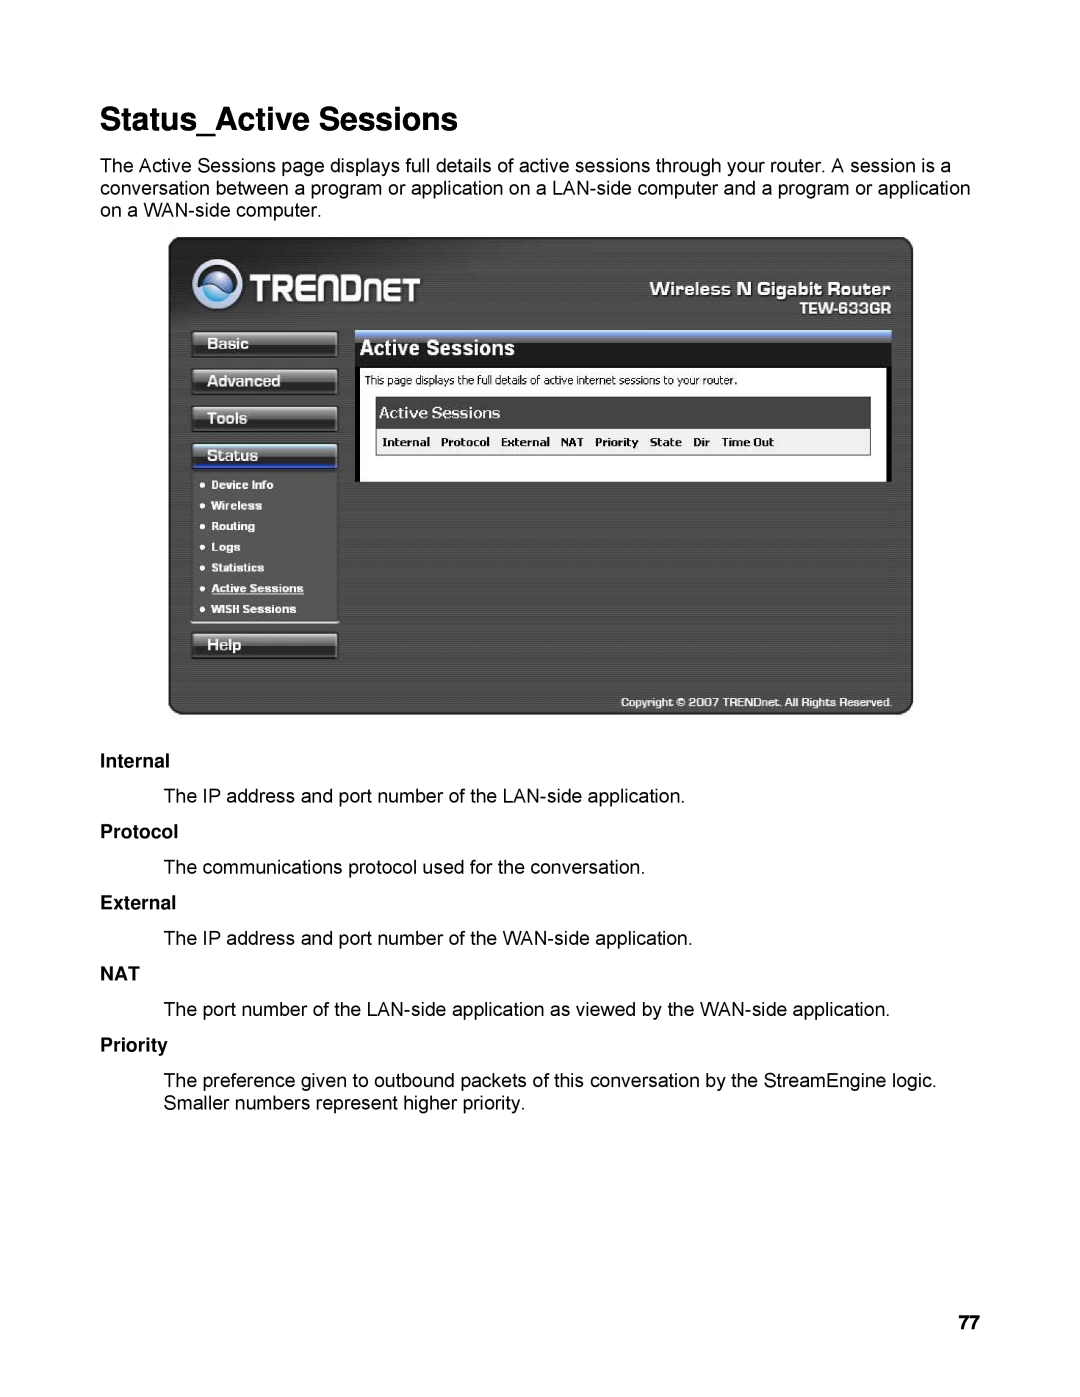 TRENDnet TEW-633GR manual StatusActive Sessions, Internal, Protocol, External, Priority 